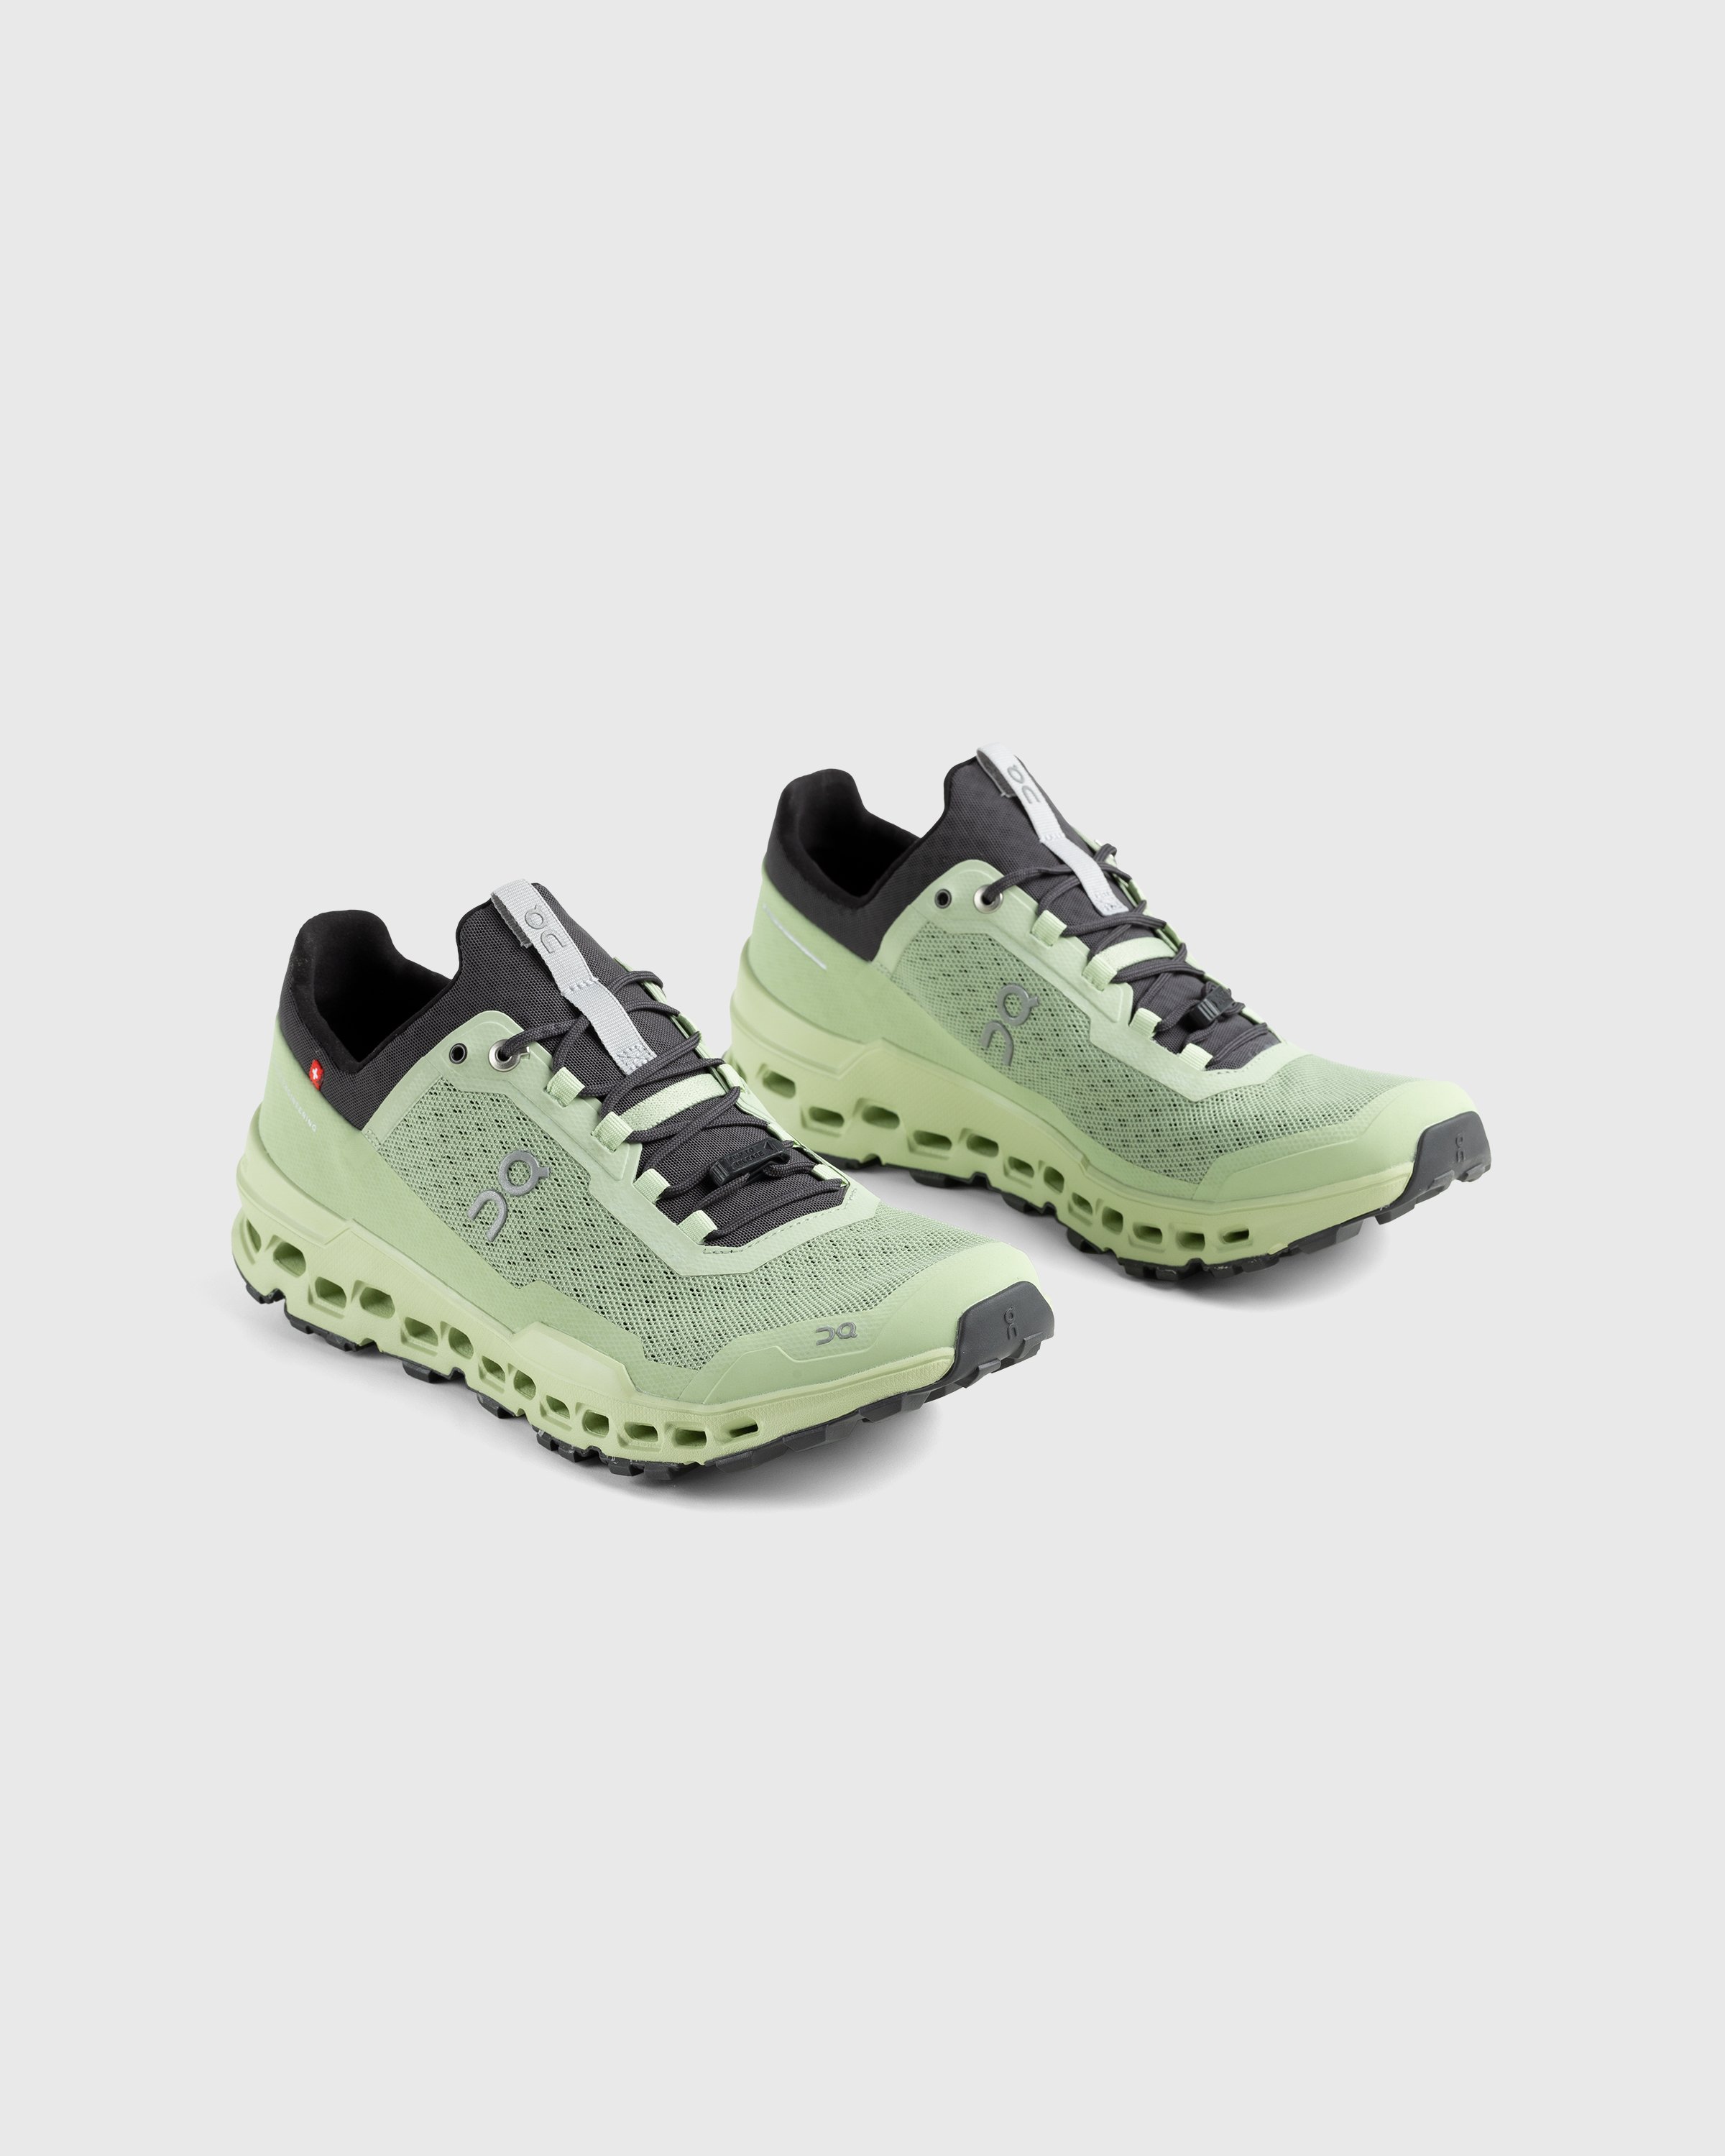 On - Cloudultra Vine/Meadow - Footwear - Green - Image 3